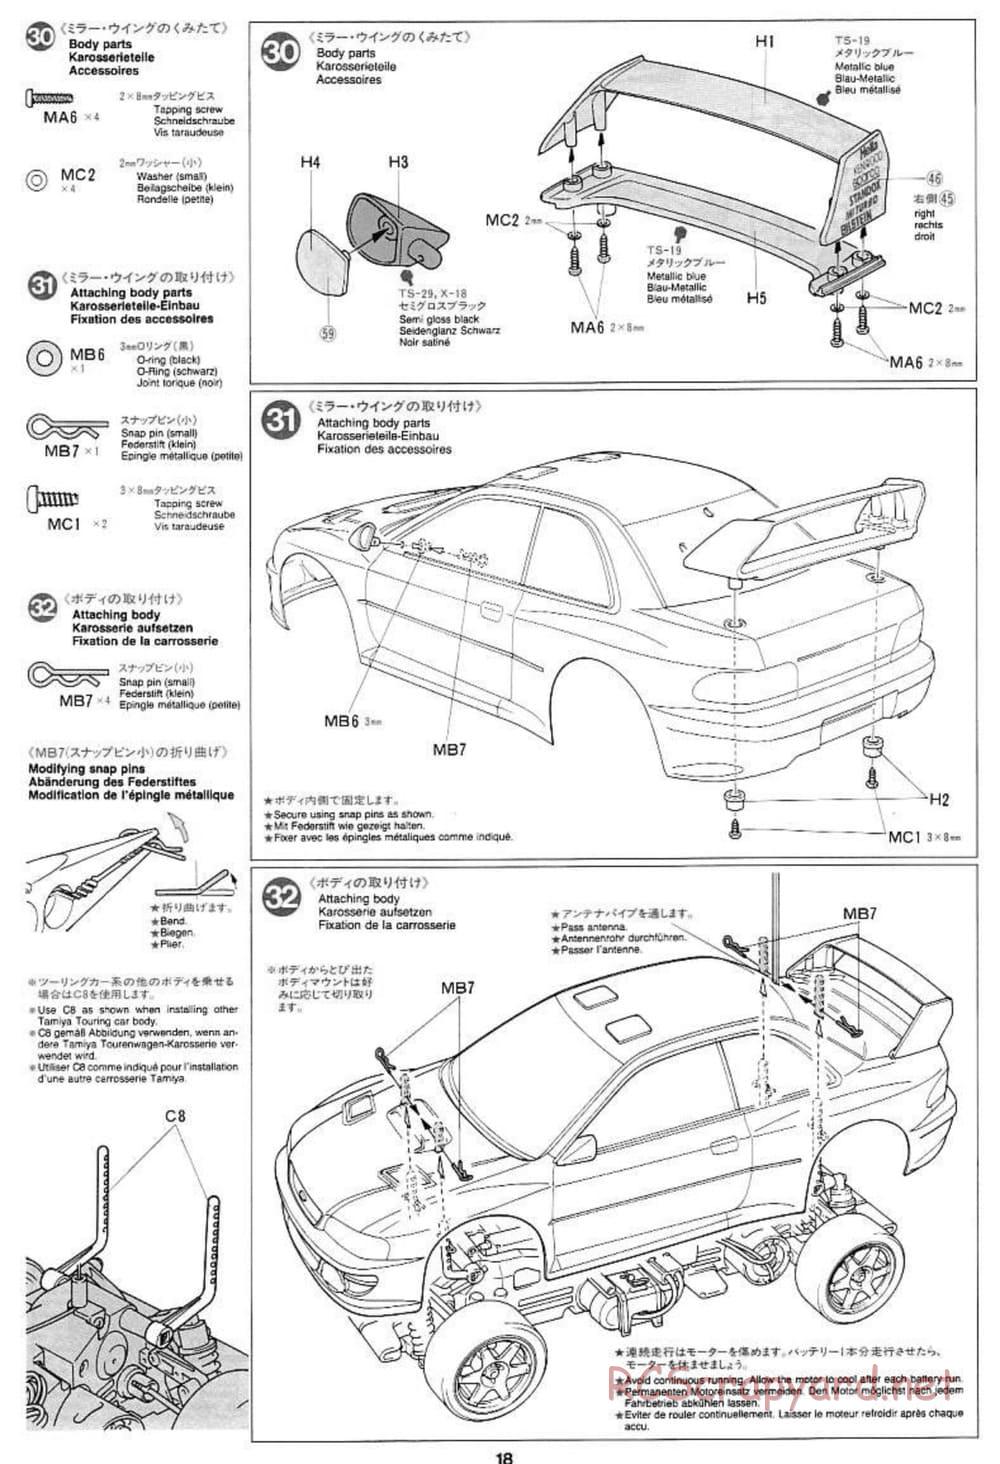 Tamiya - Subaru Impreza WRC - TL-01 Chassis - Manual - Page 18